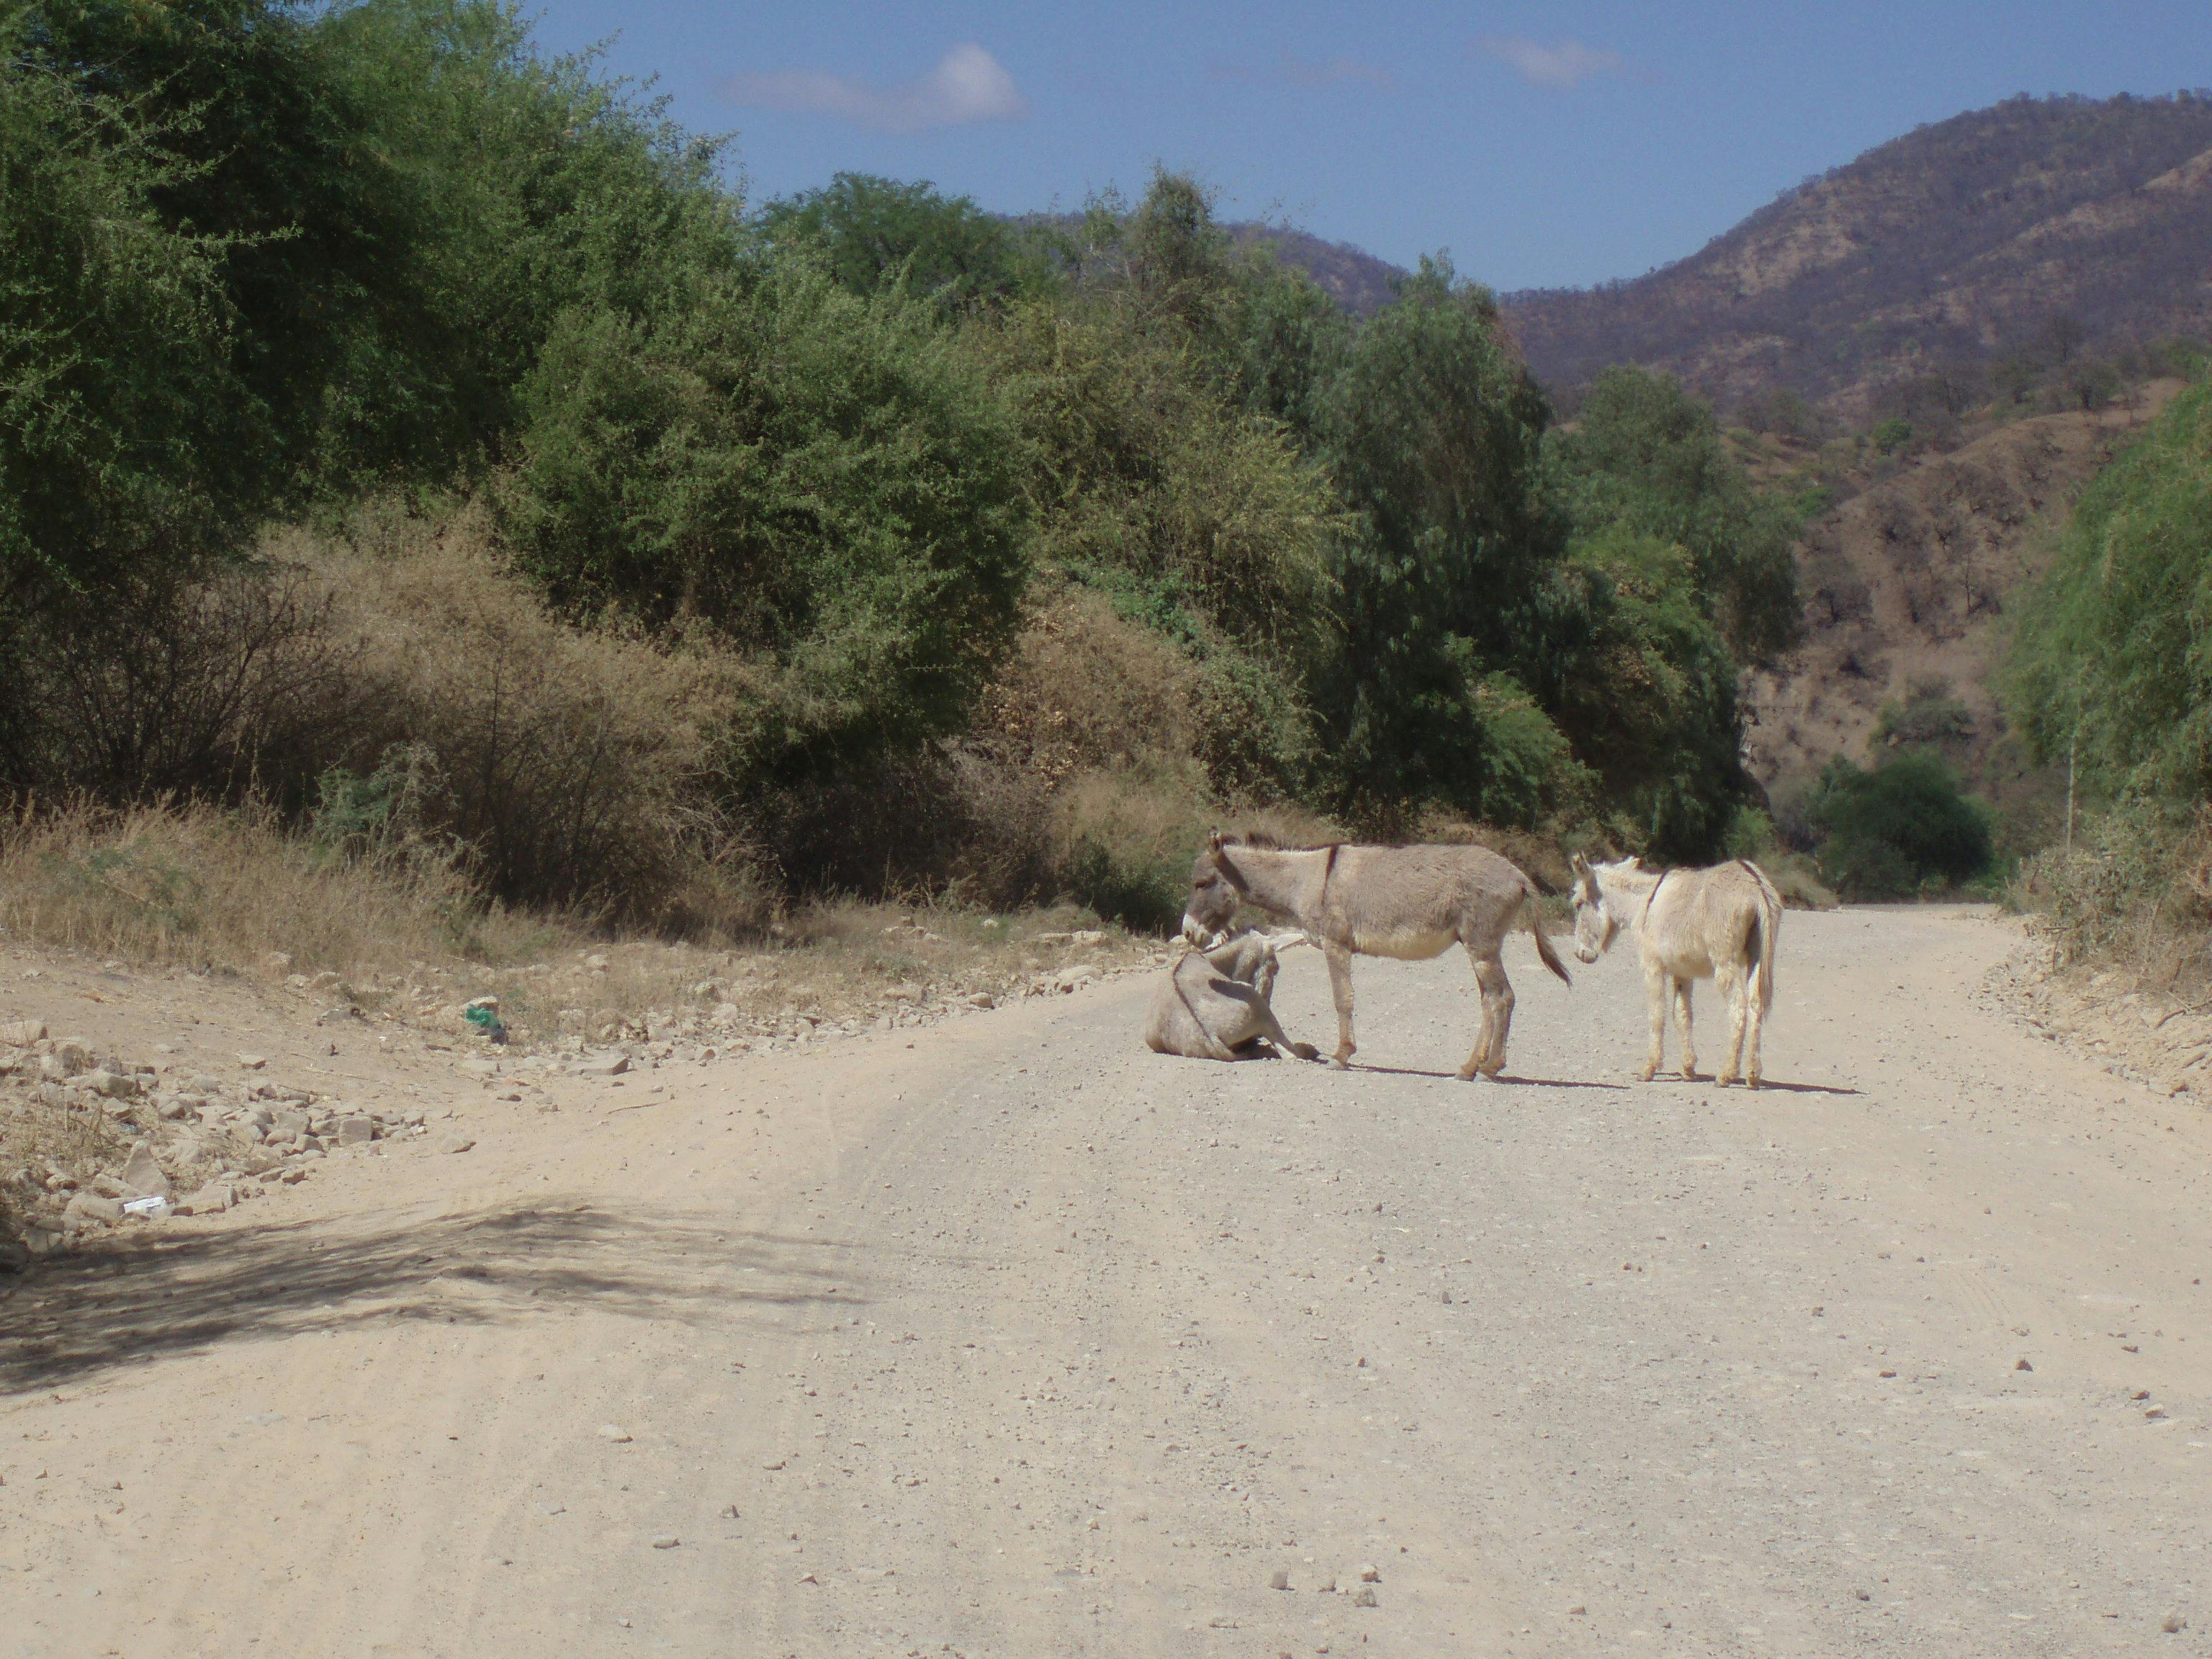 Free stock photo of donkeys on dusty road